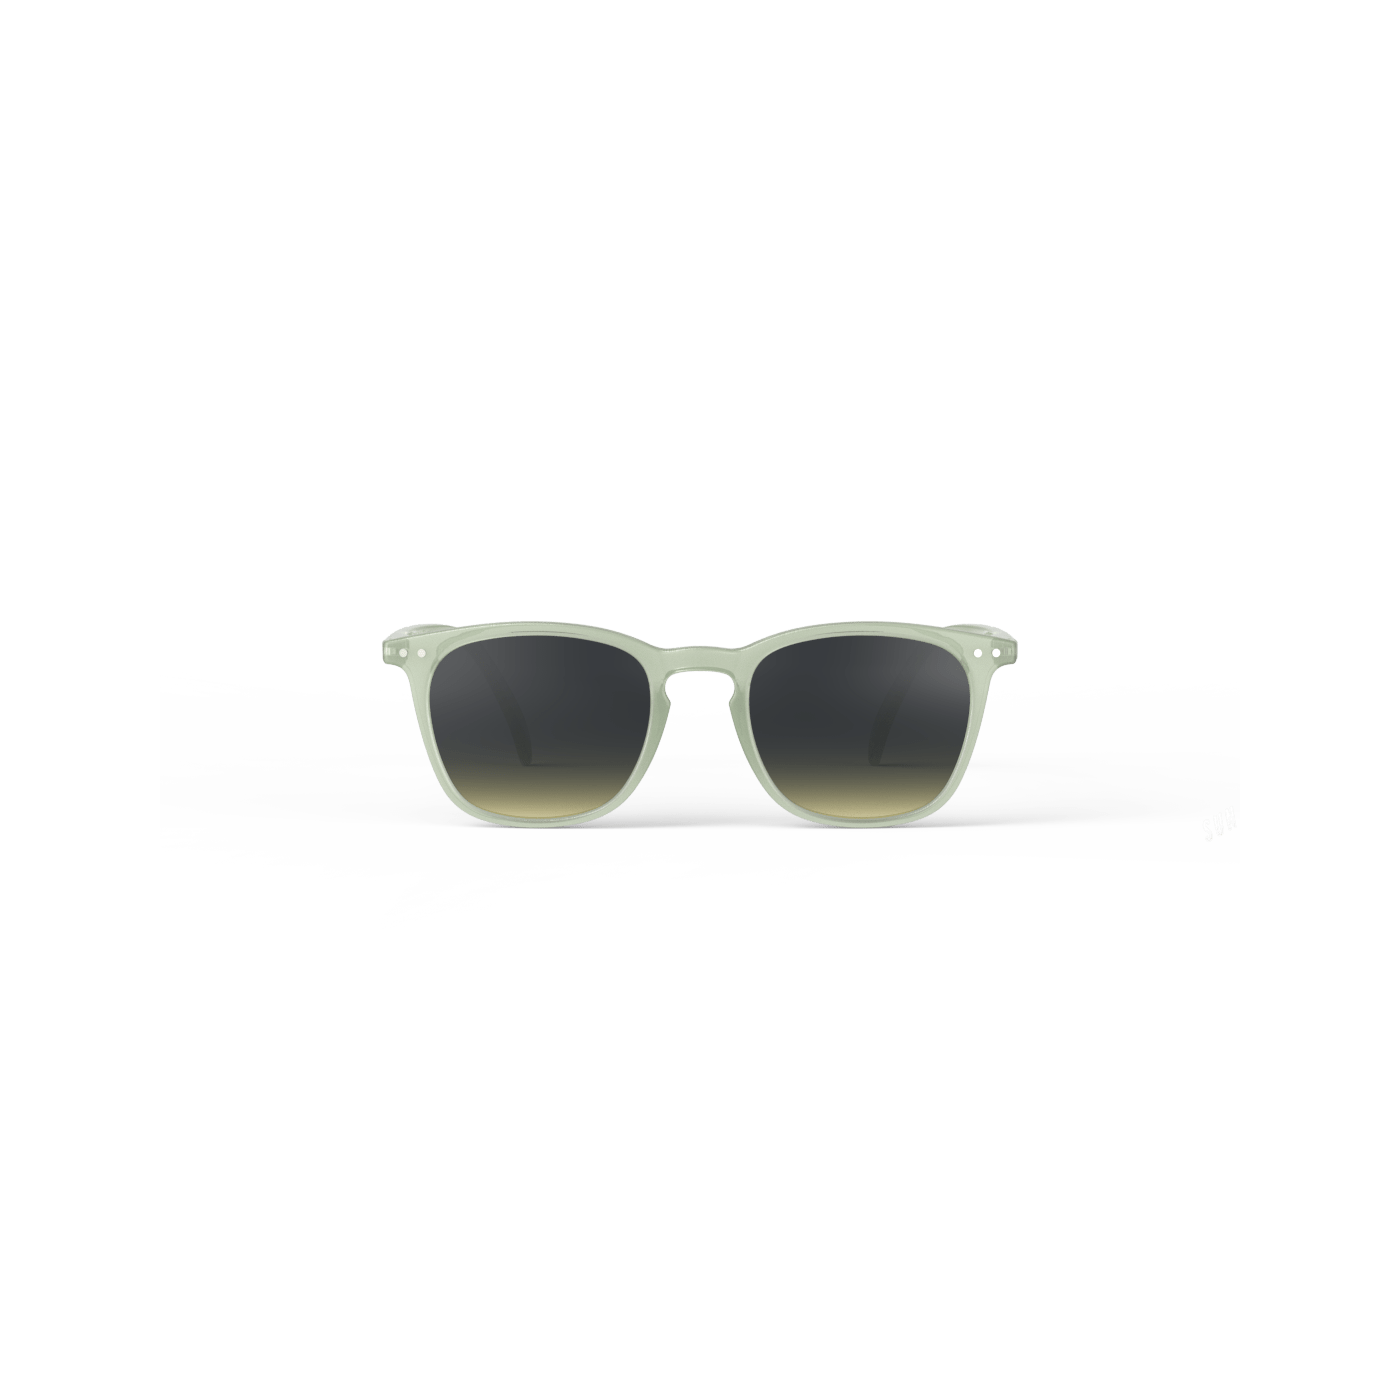 sunglasses quiet dream frame E day dream collection by Izipizi